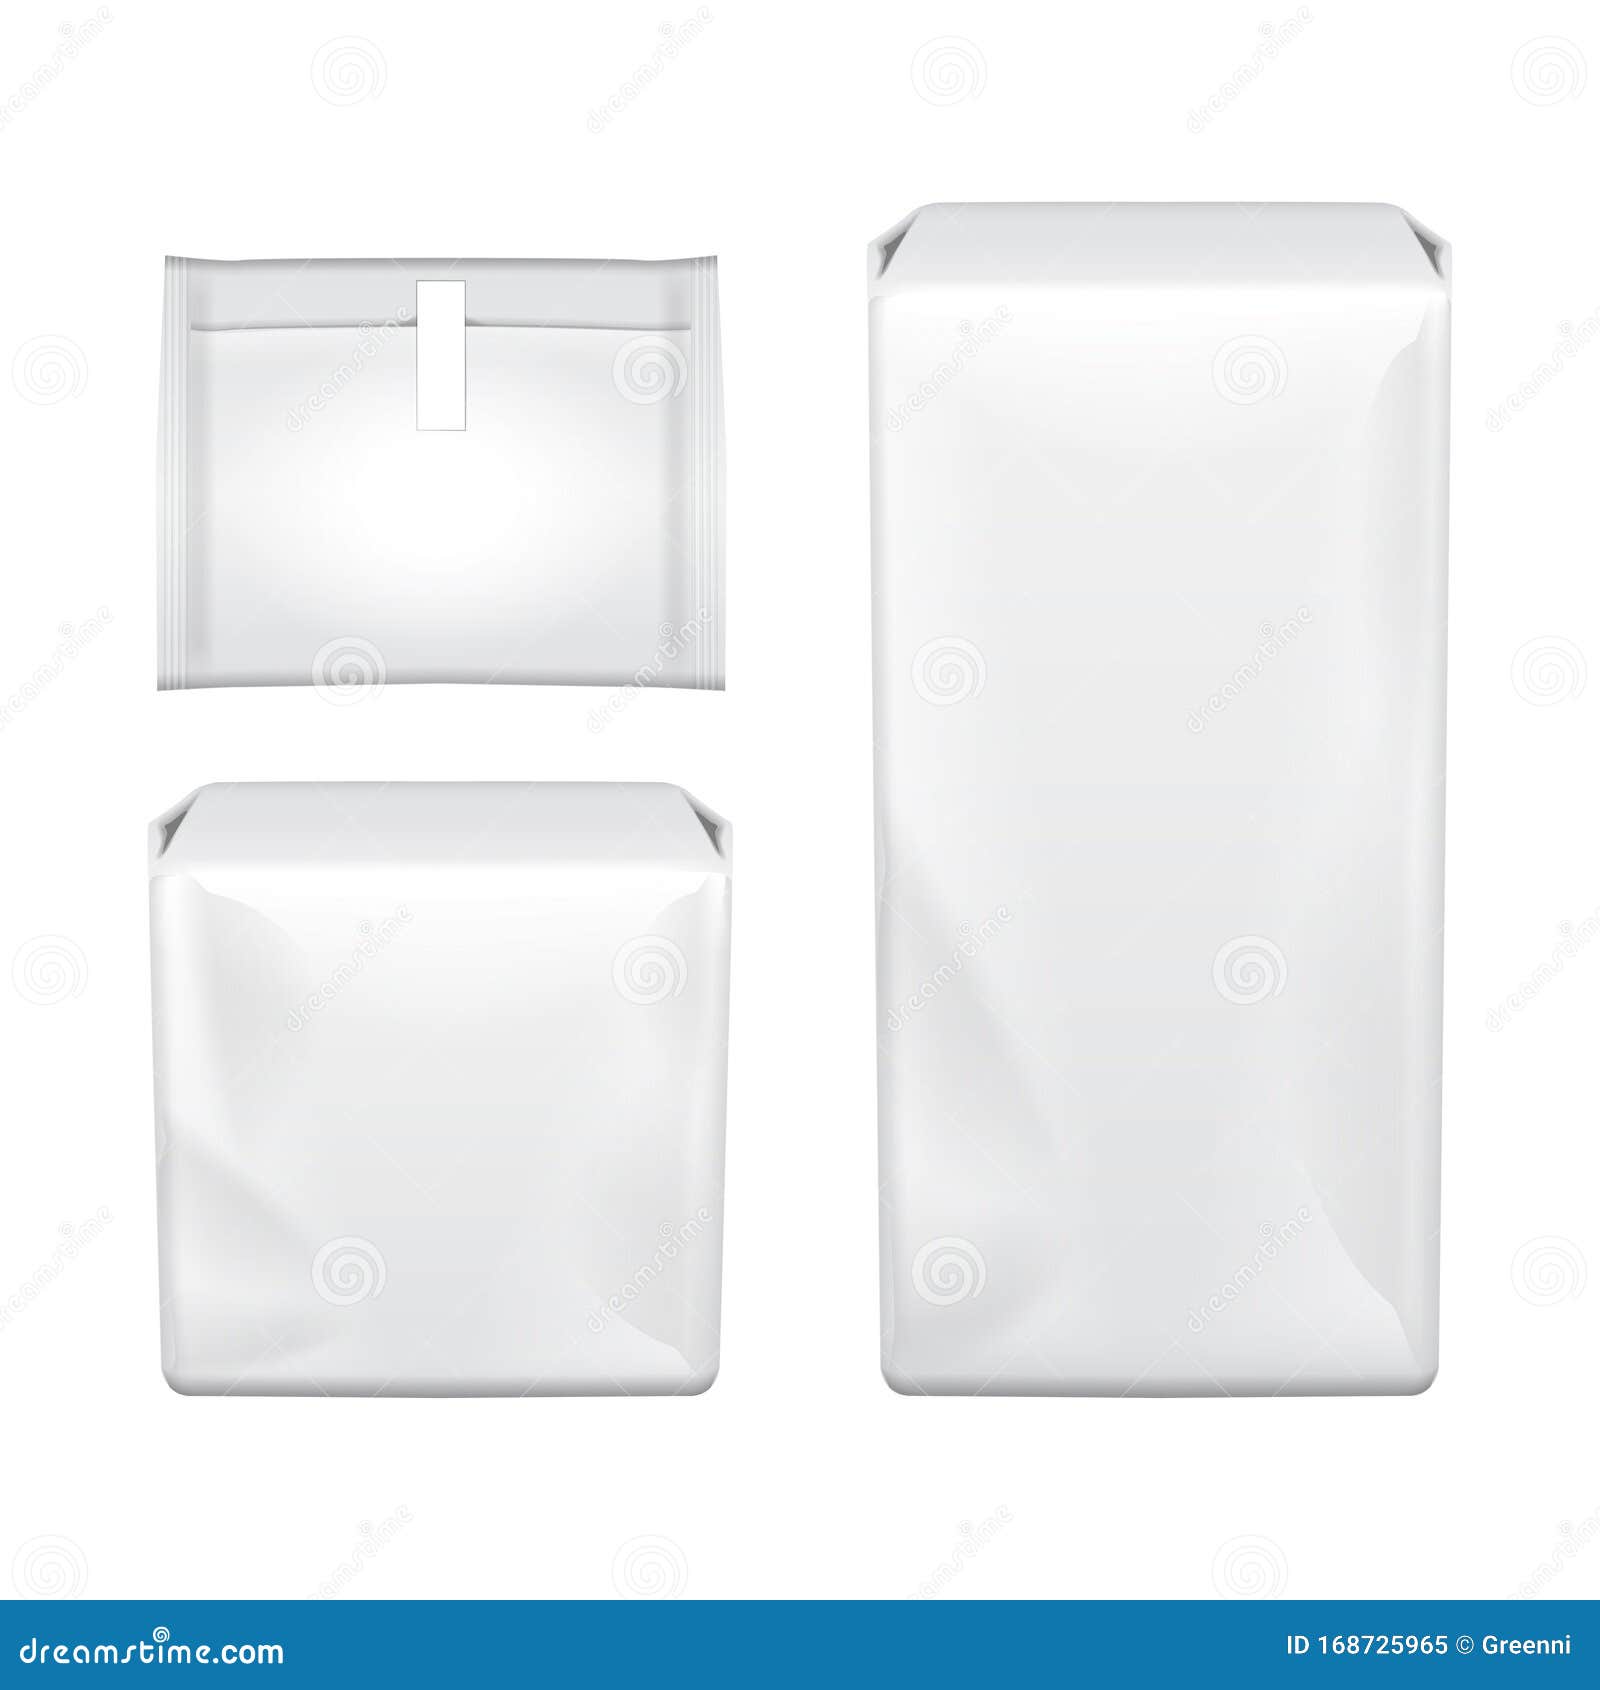 Download Feminine Hygiene Pad Mock Up. Two Packaging Hygienic ...